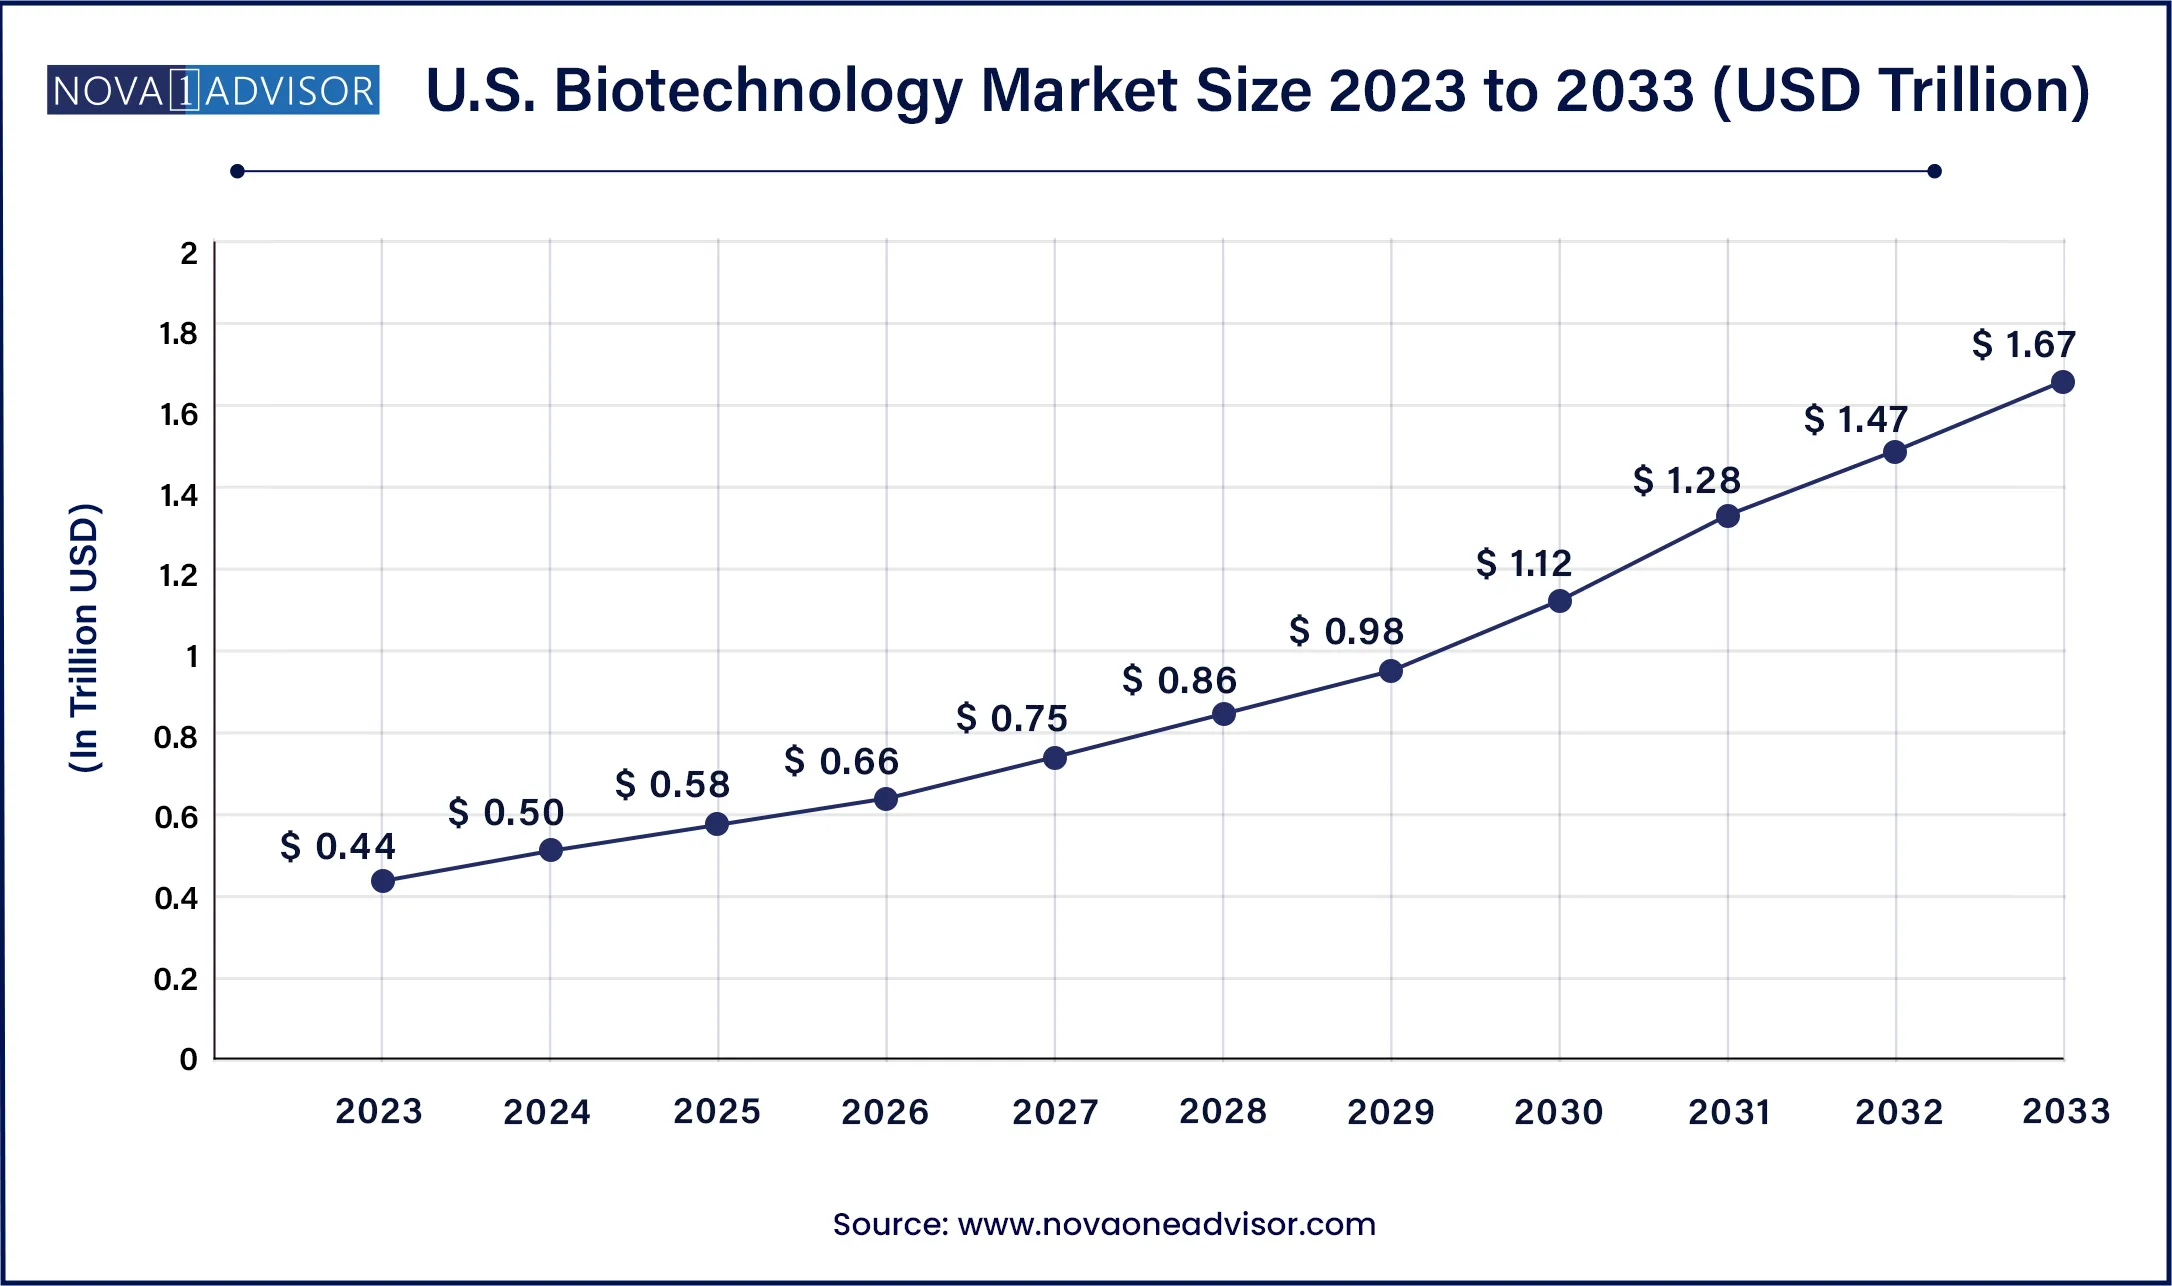 U.S. Biotechnology Market Size, 2024 to 2033